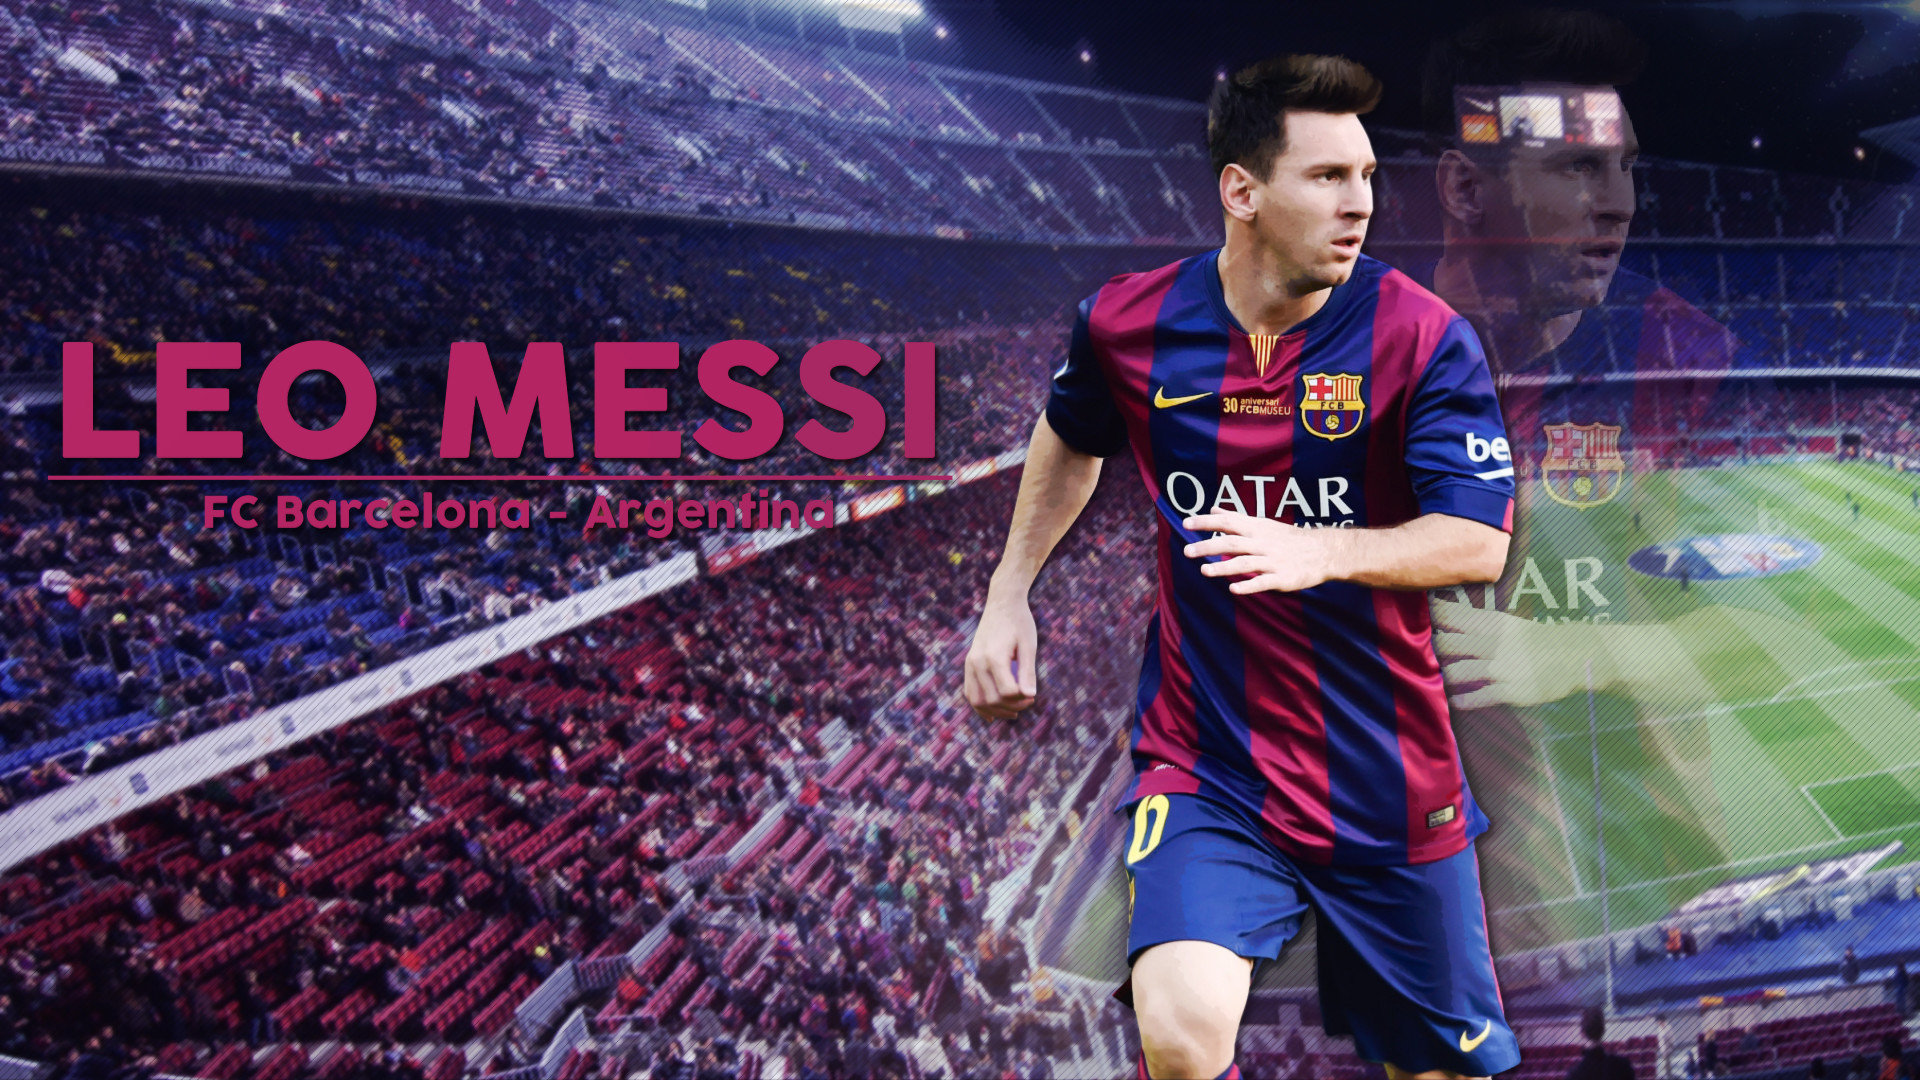 Messi Wallpapers Hd Old - Messi Wallpaper 2017 Hd - HD Wallpaper 